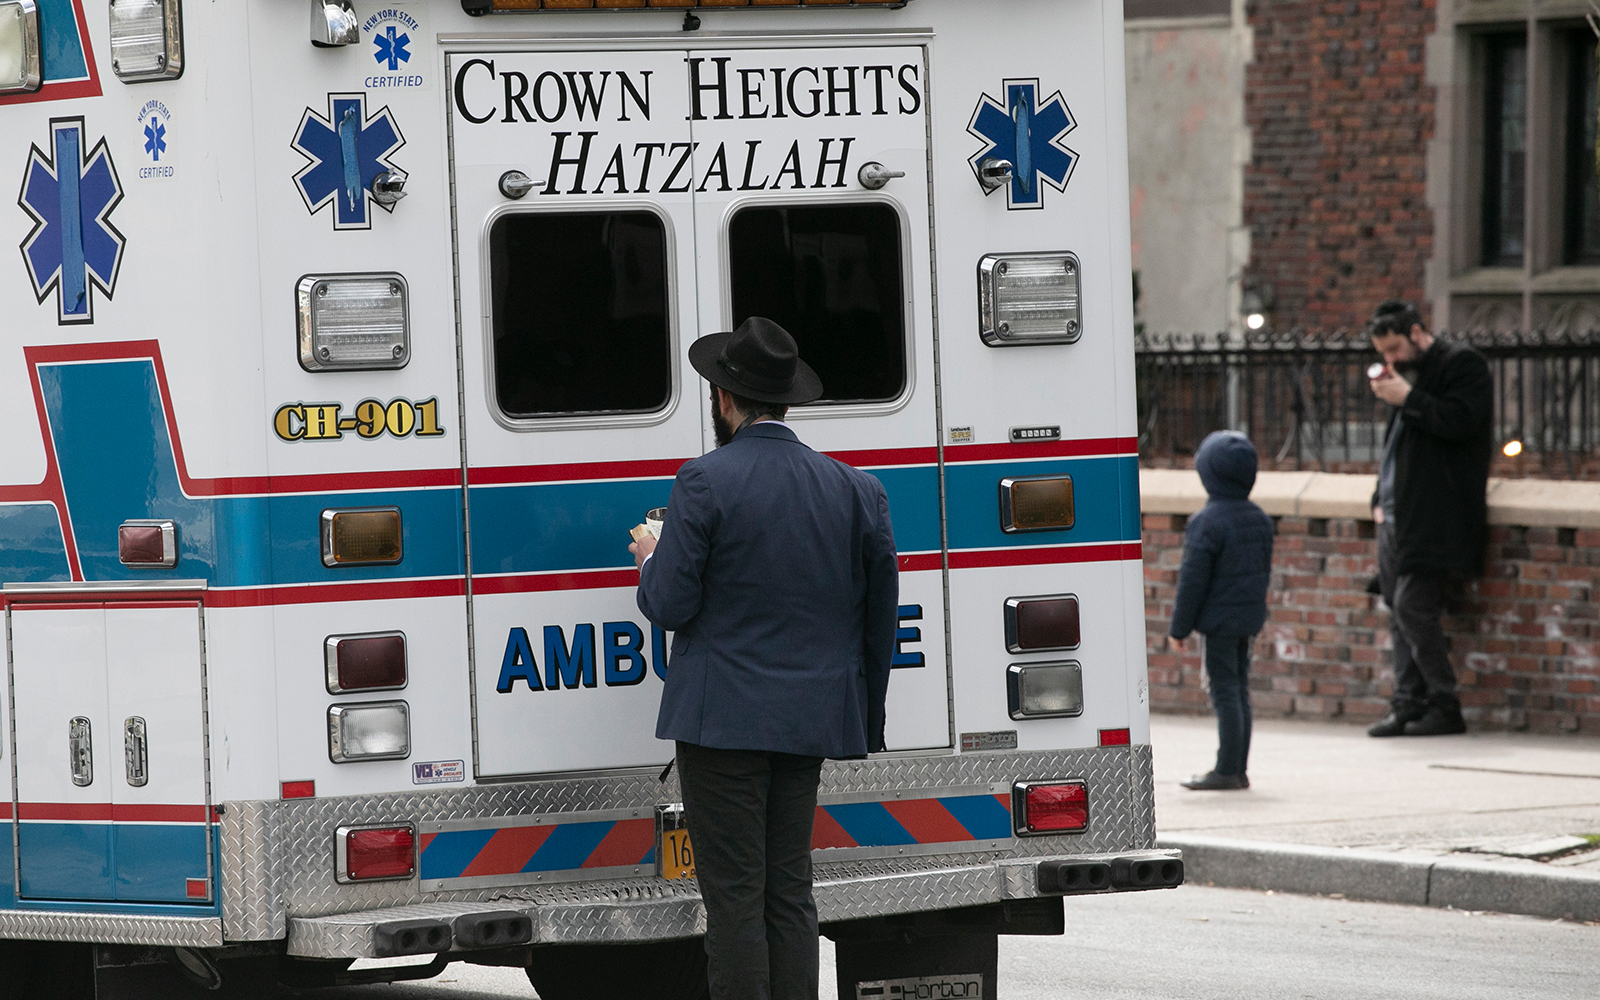 A man prays next to an idle ambulance in the Crown Heights neighborhood of Brooklyn, New York, April 7, 2020. (AP/Mark Lennihan)